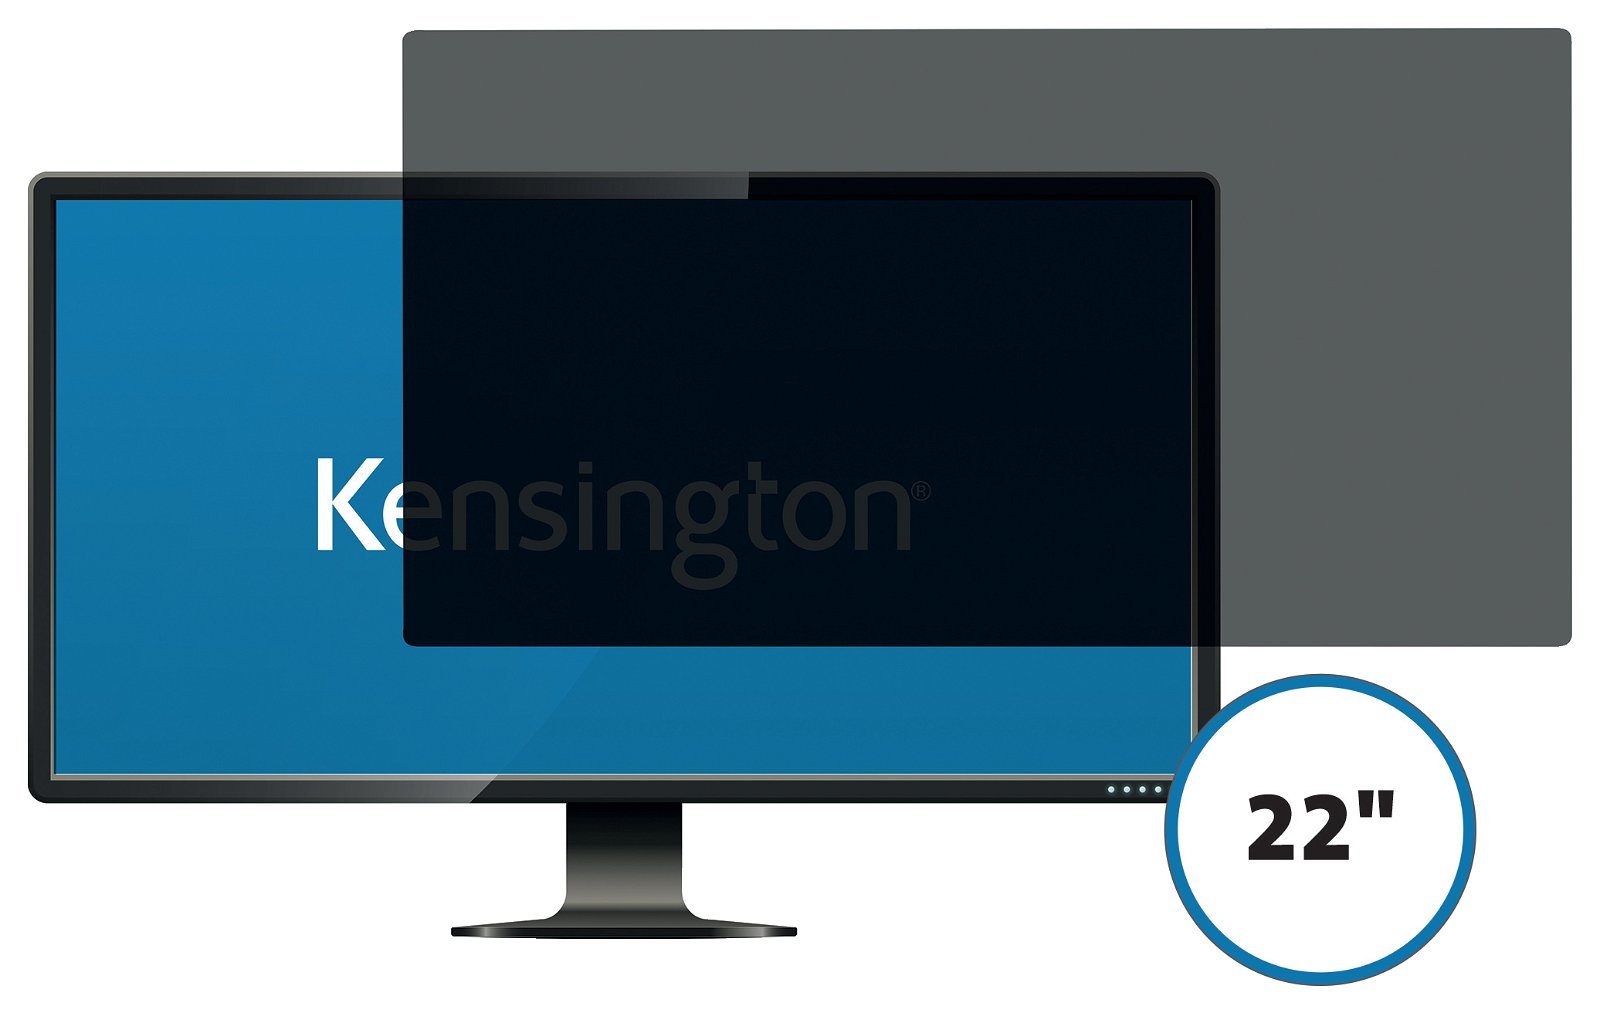 Kensington skærmfilter 22" 16:10 transparent